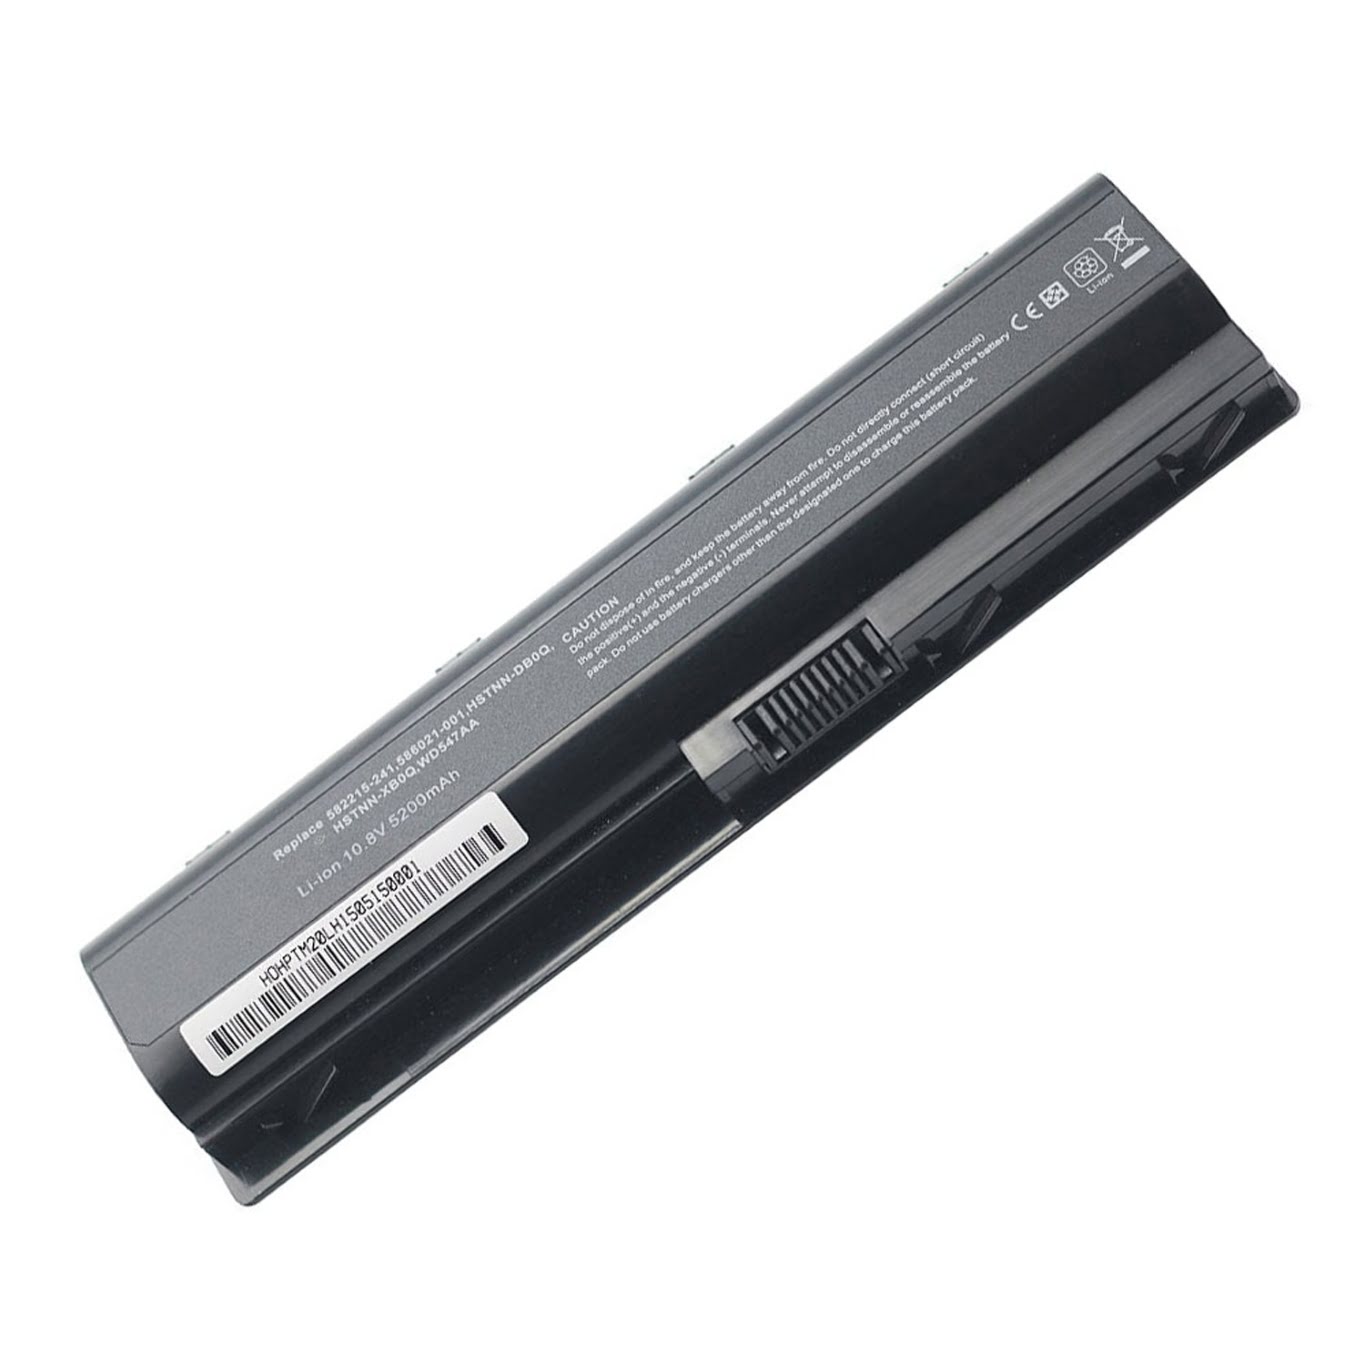 Hp 582215-241, 582215-421 Laptop Battery For Touchsmart Tm2-1000, Touchsmart Tm2-1050ez replacement